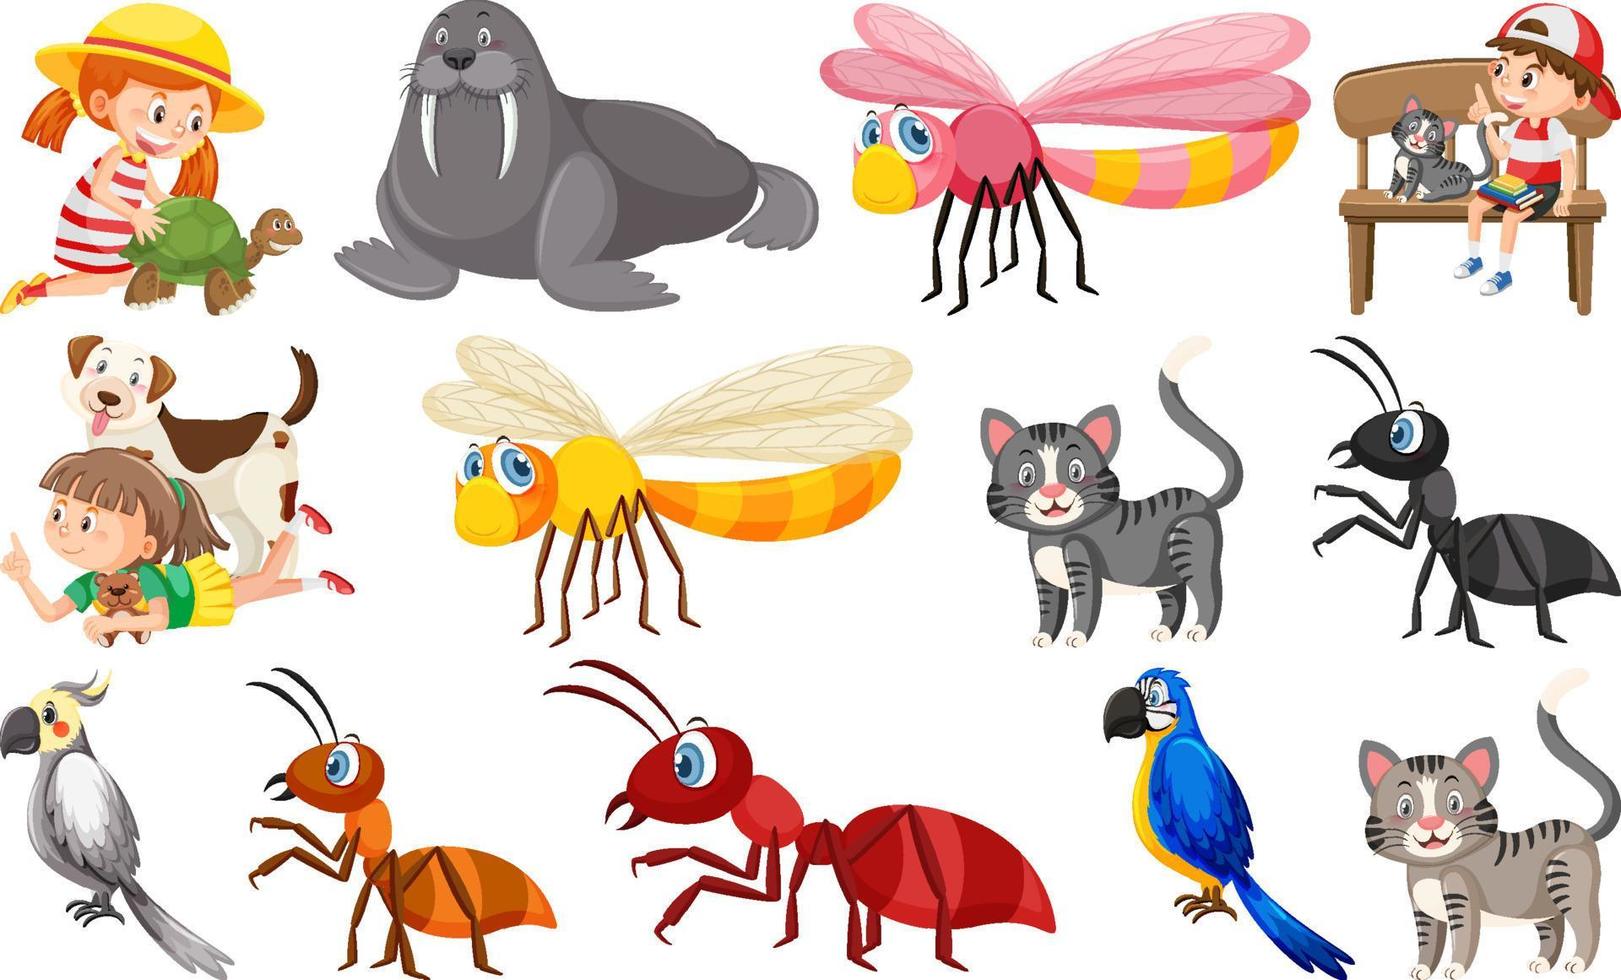 Set of various wild animals in cartoon style vector